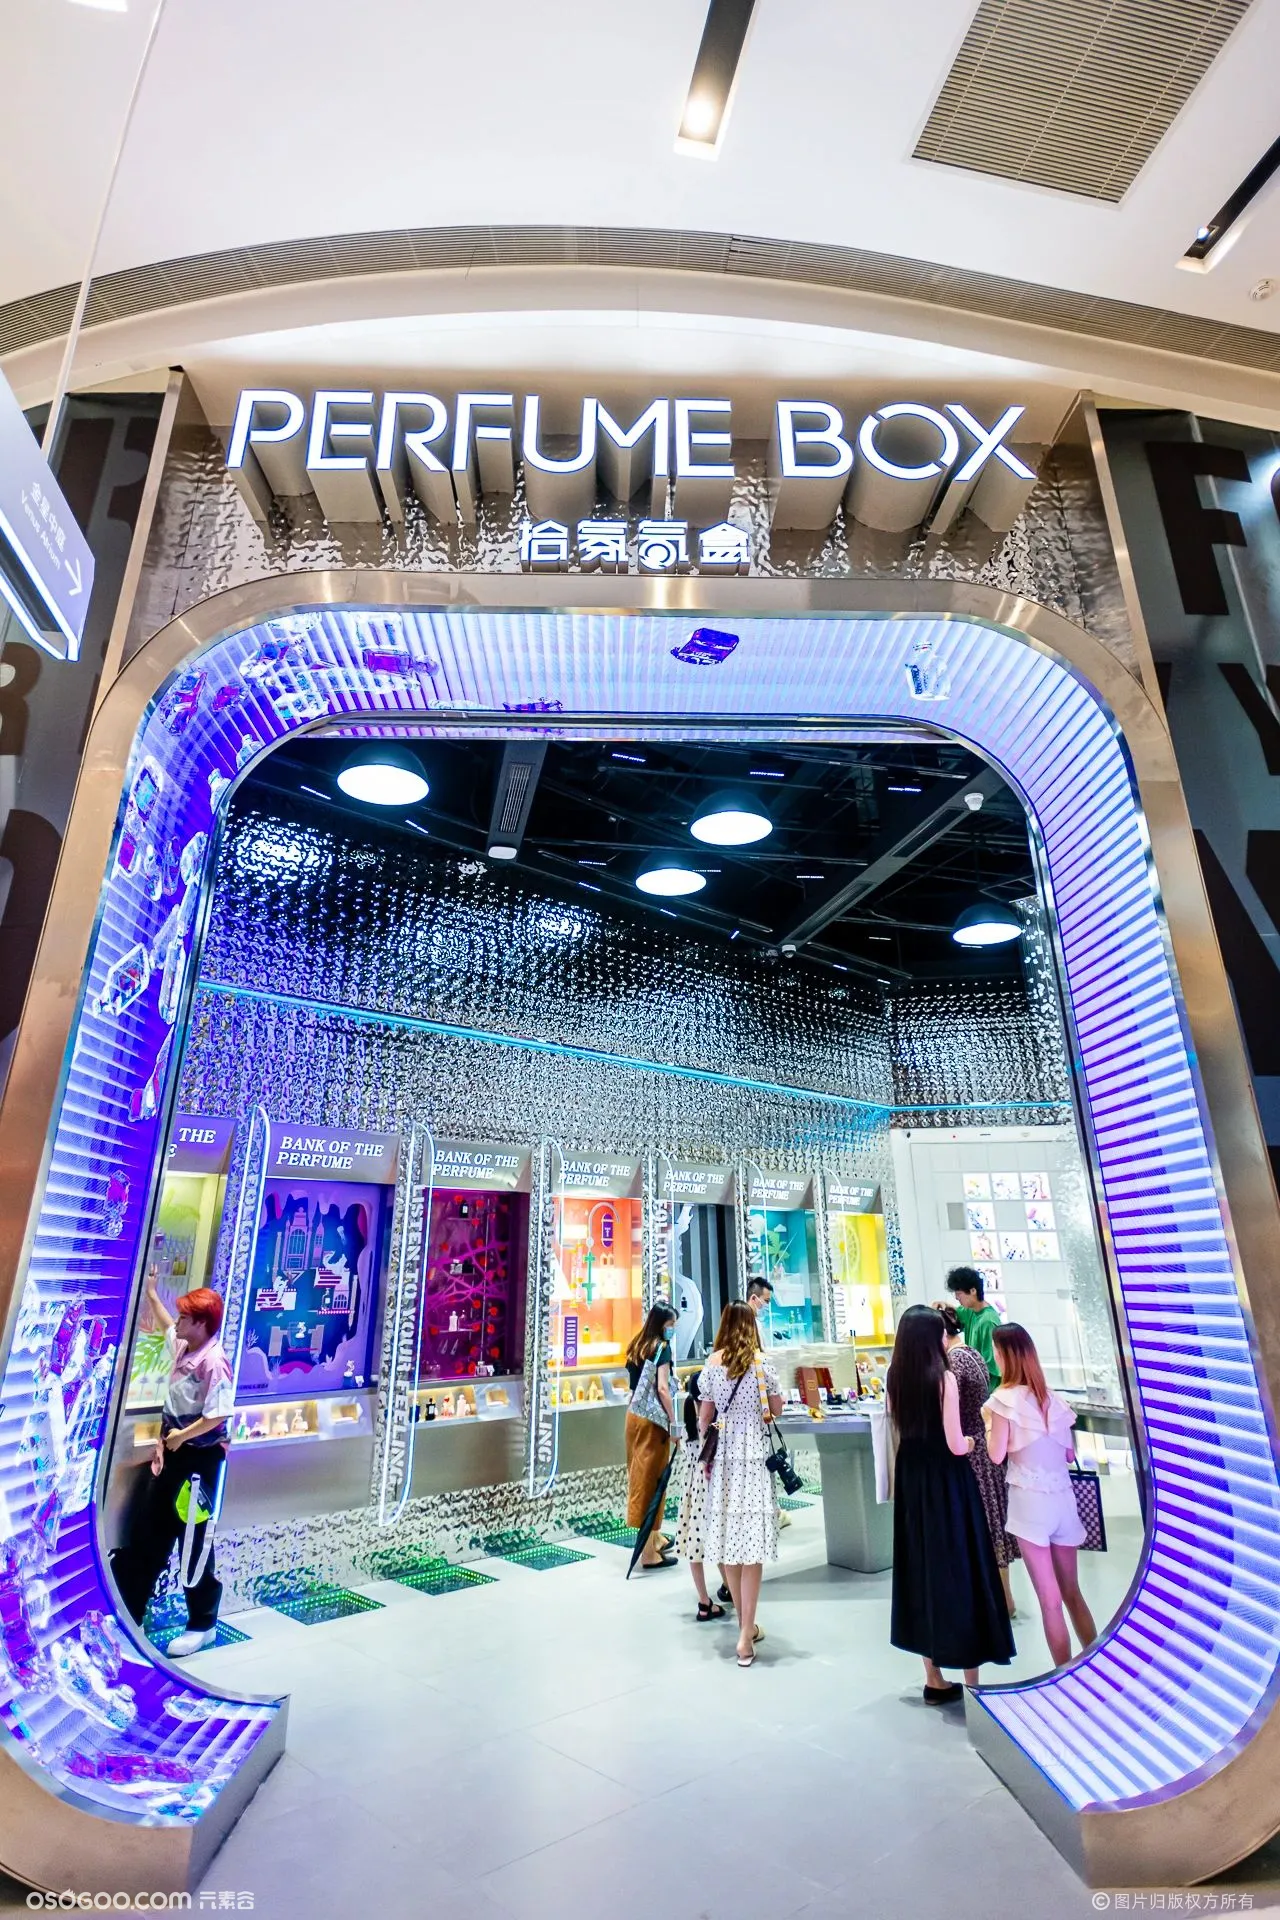 PERFUME BOX 拾氛气盒「香水银行主题概念店」